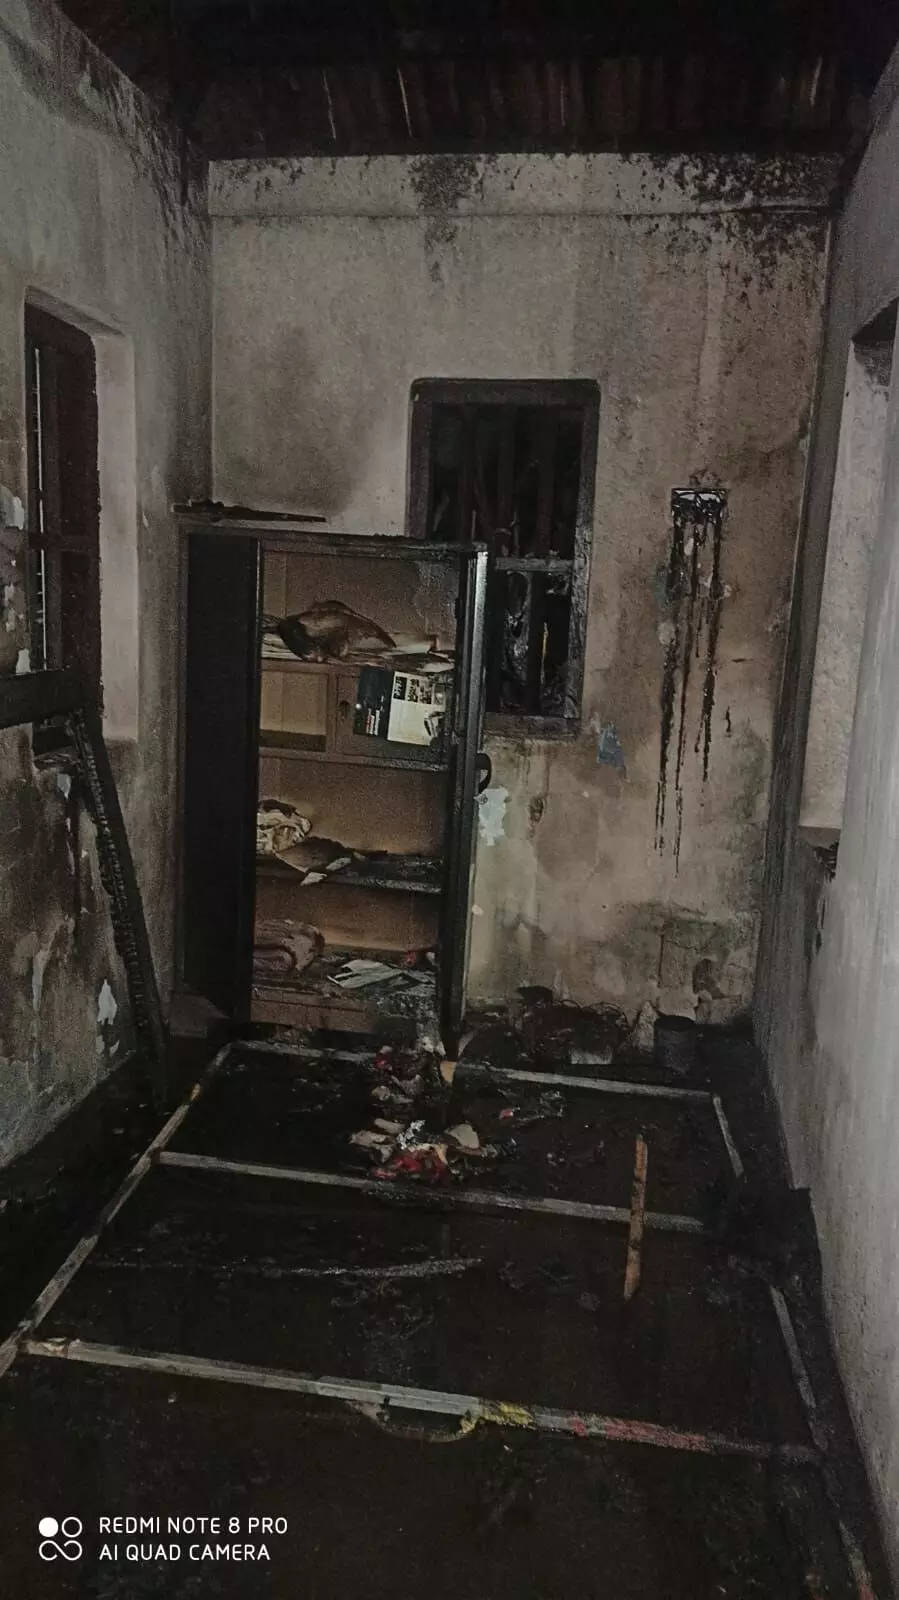 CPM office set on fire in Perambra